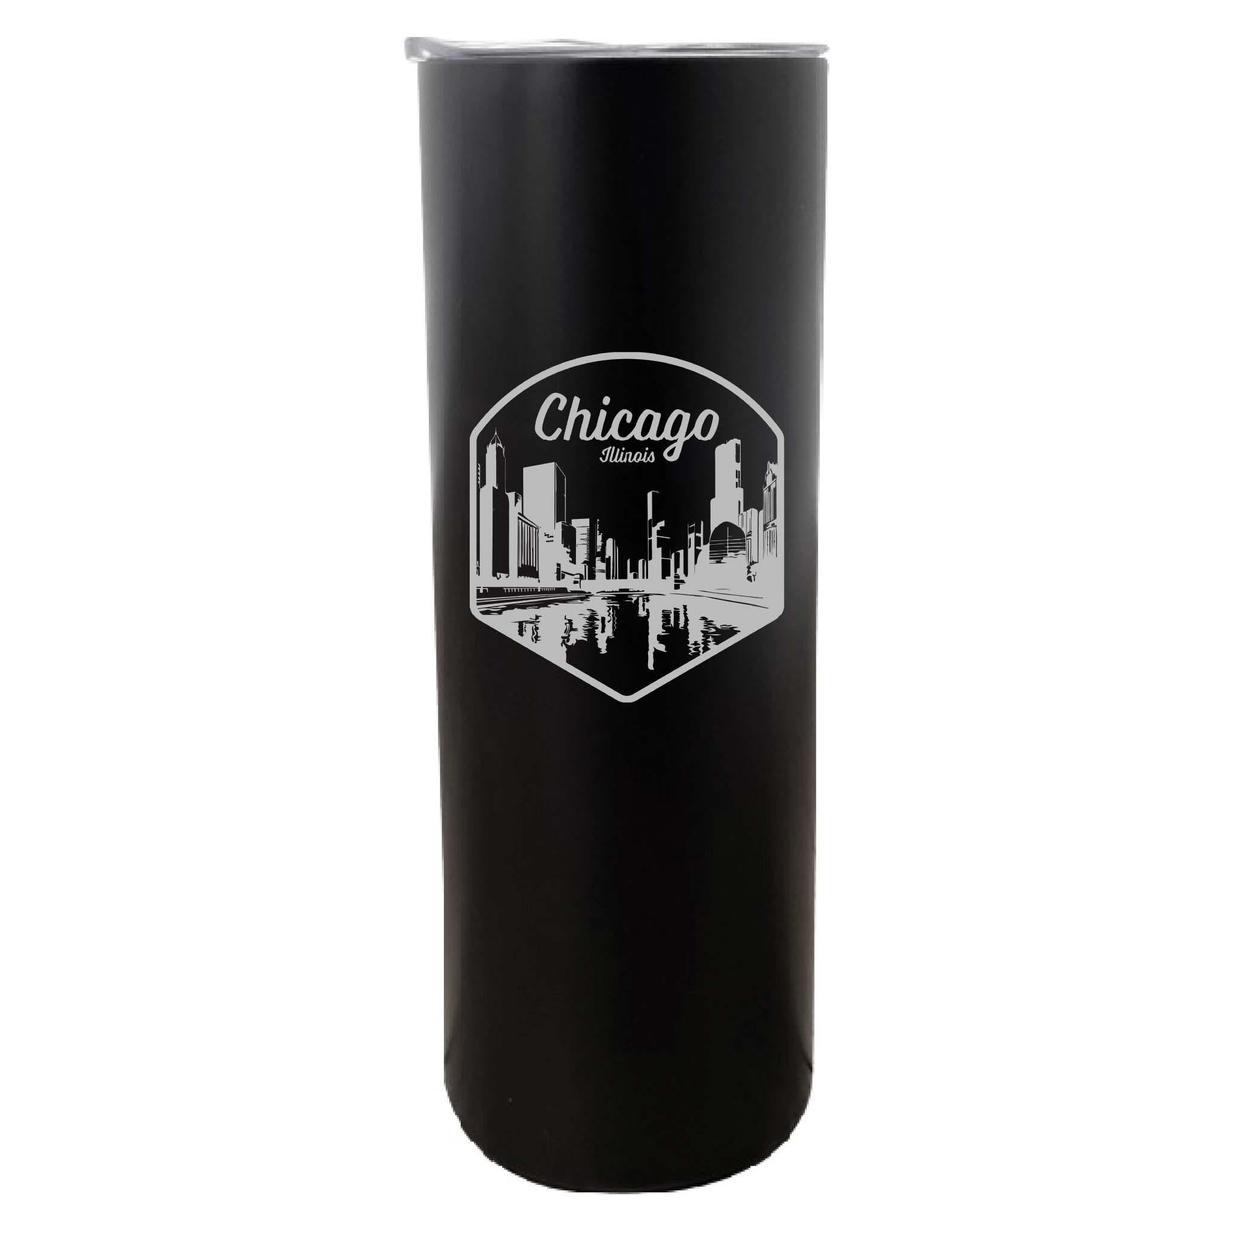 Chicago Illinois Souvenir 20 Oz Engraved Insulated Skinny Tumbler - Black Glitter,,2-Pack